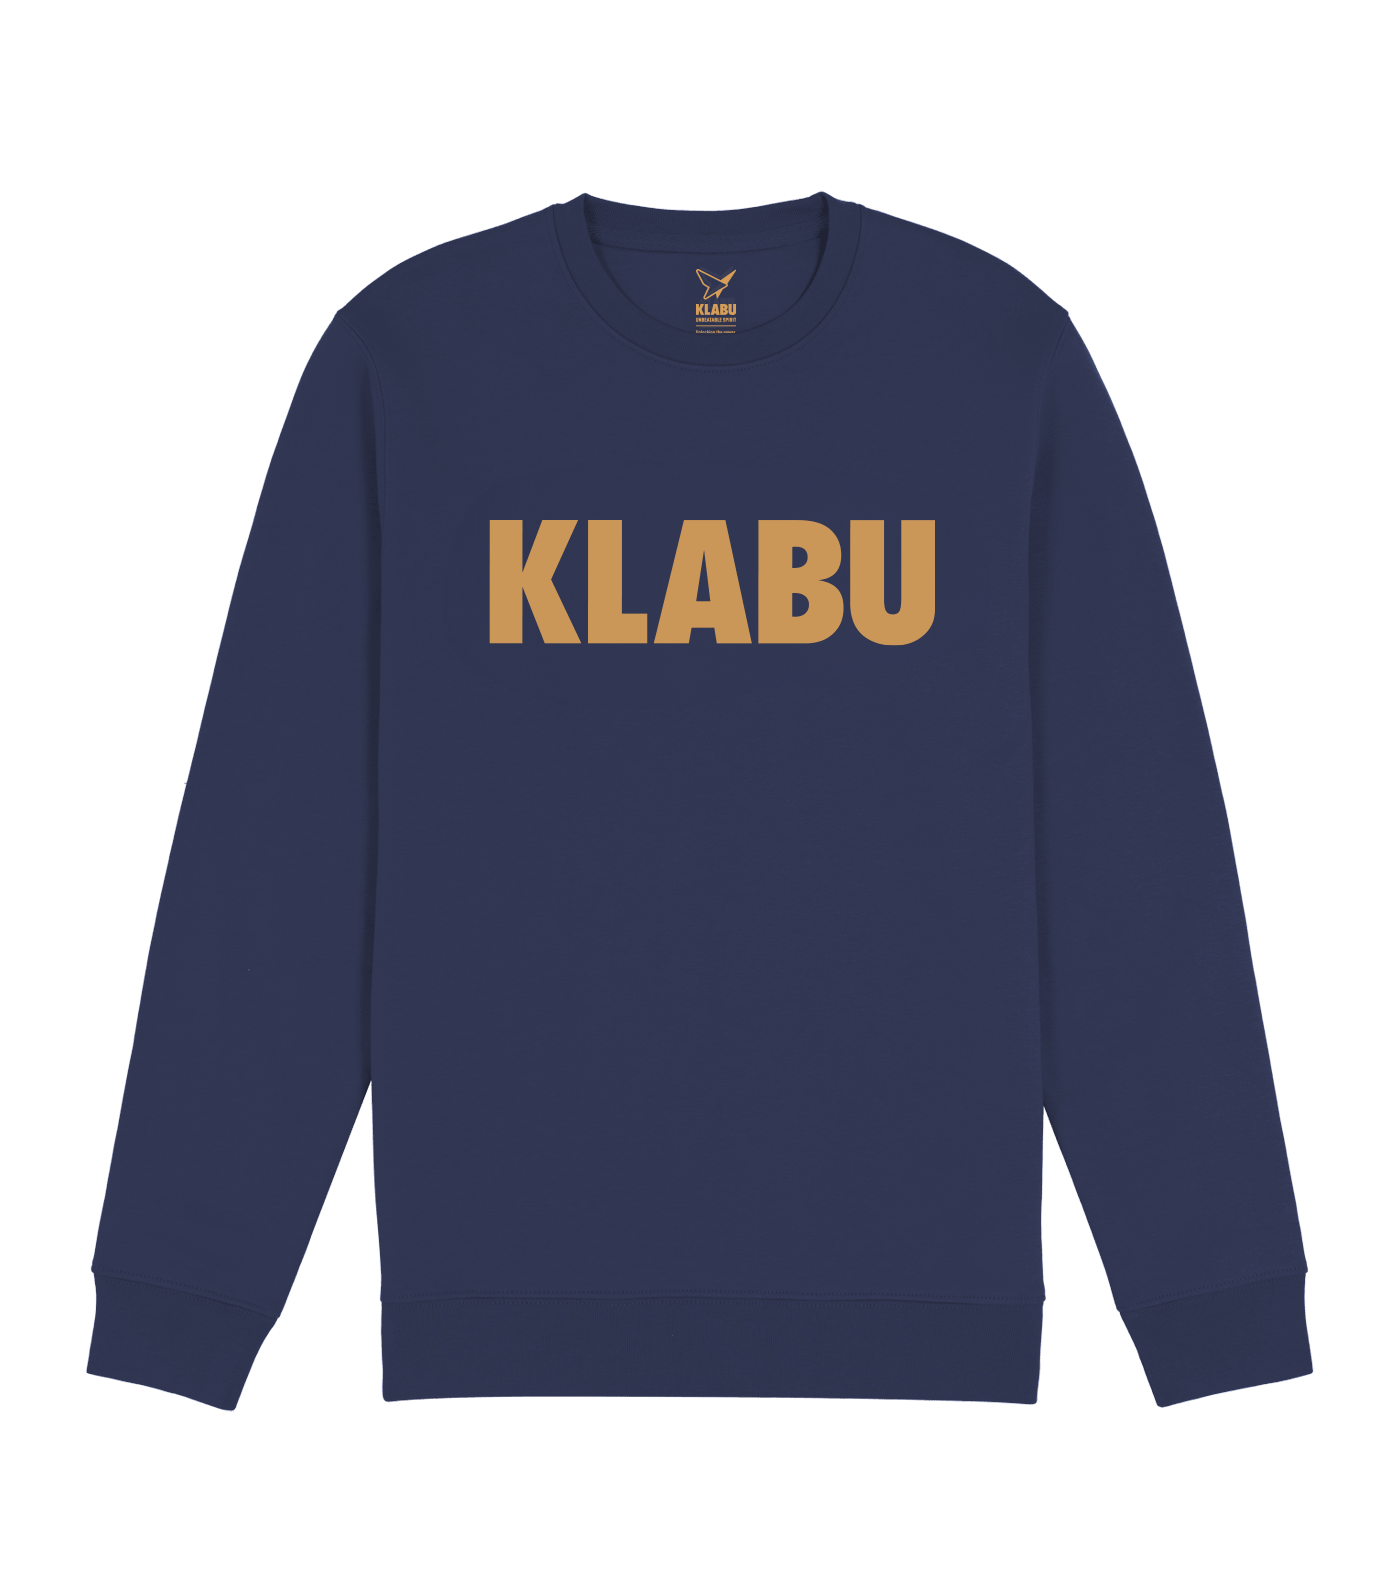 KLABU x PSG Cox's Bazar Spirit shirt